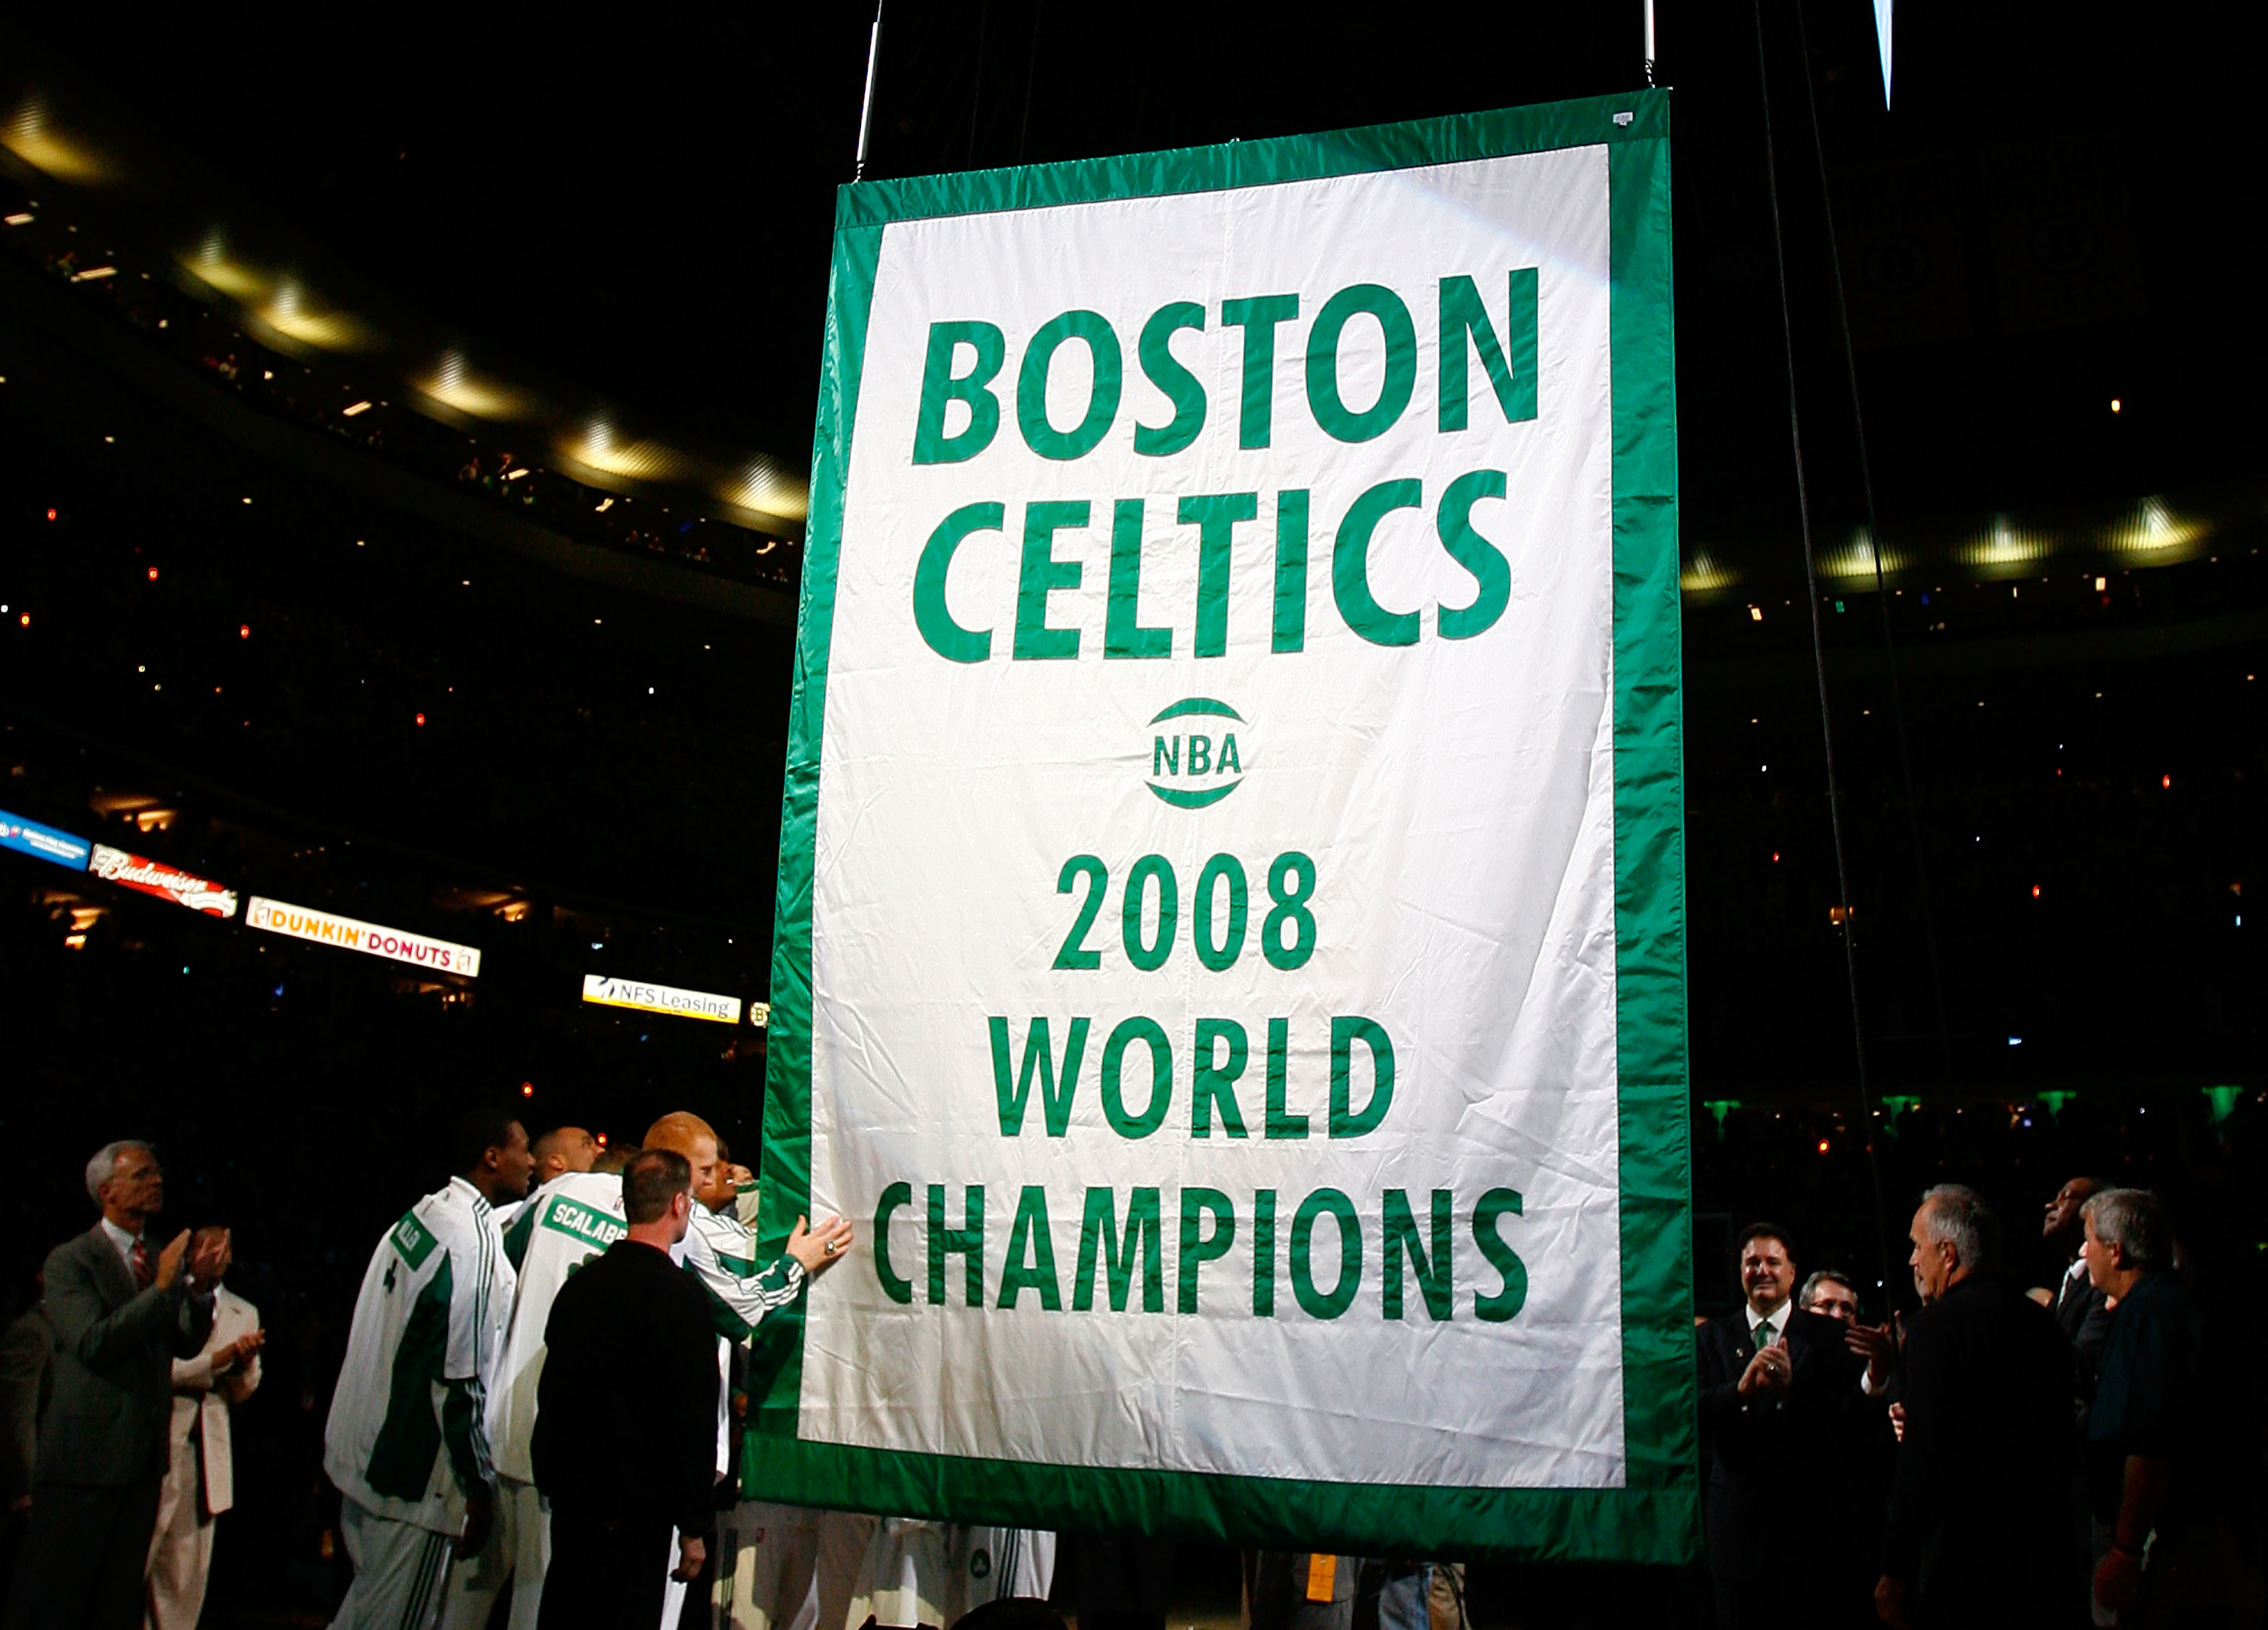 Report: These are the “City” jerseys the Boston Celtics will wear -  CelticsBlog